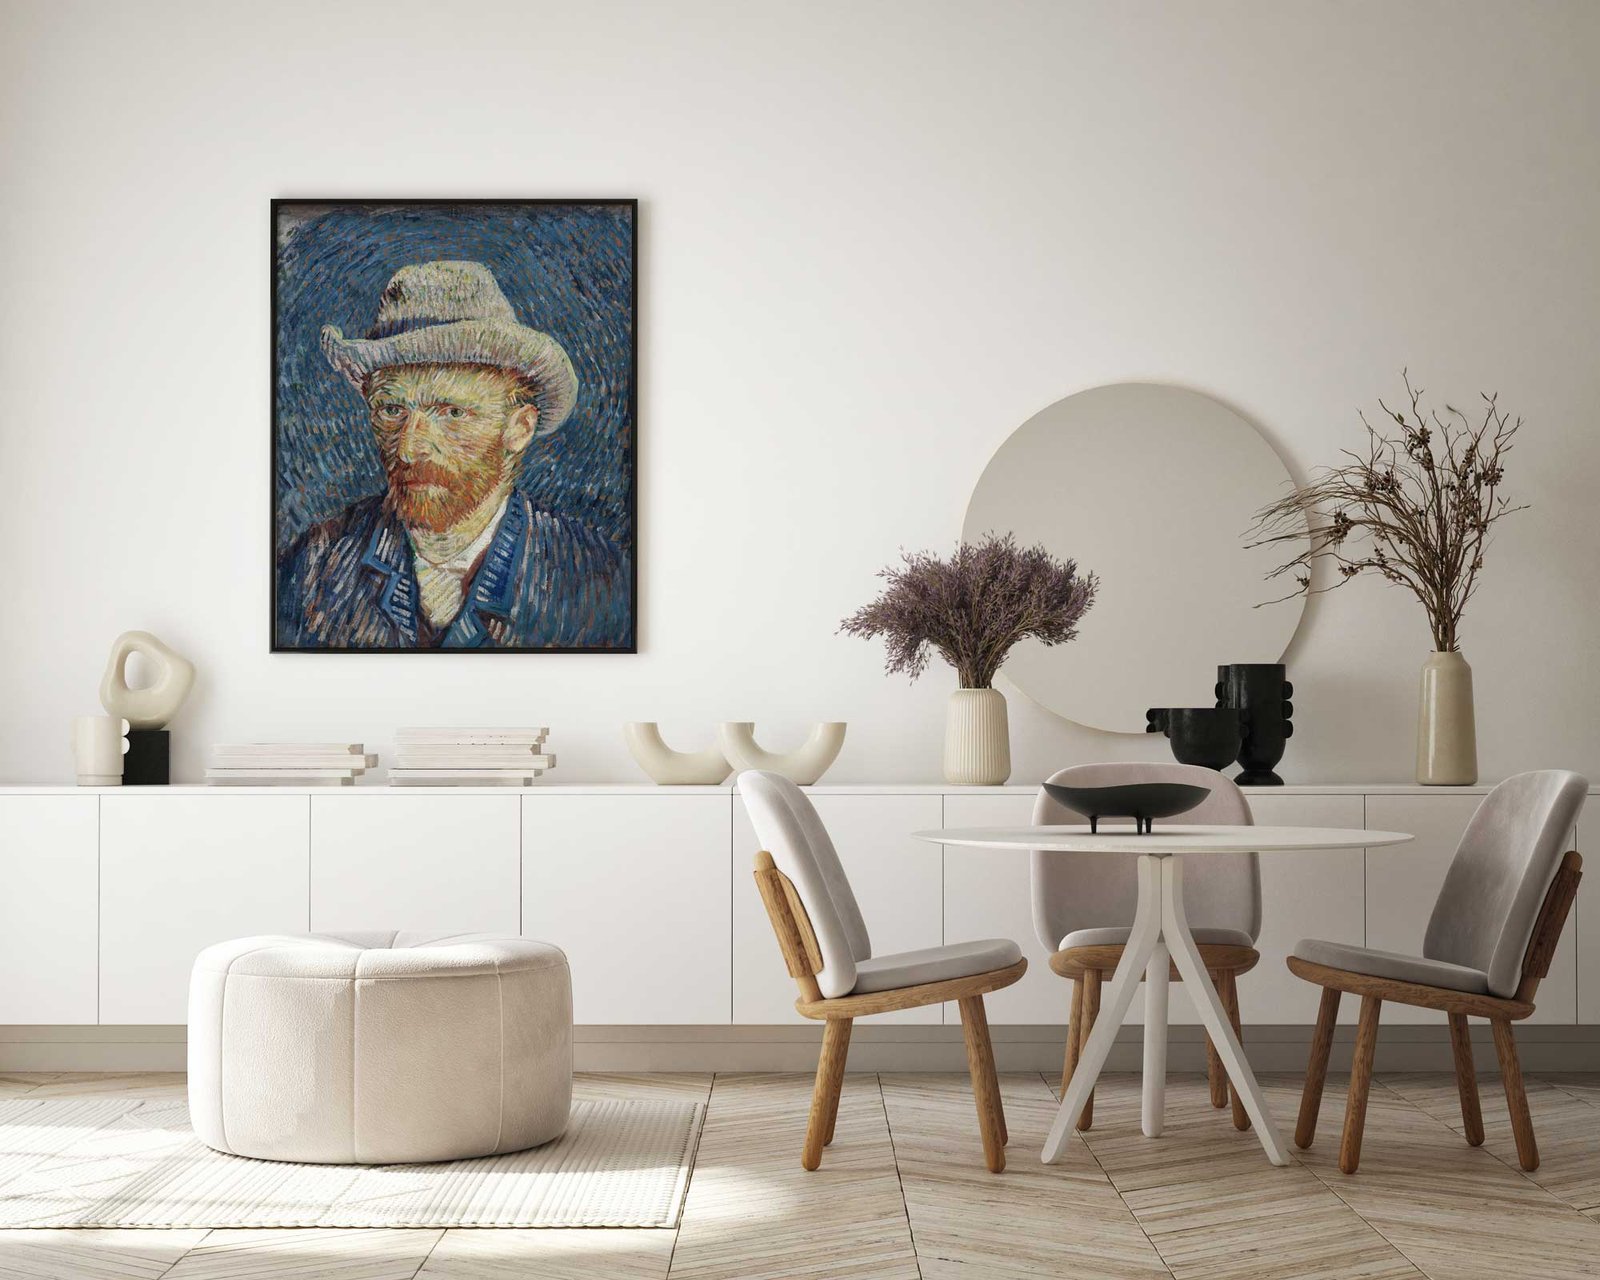 116 didelis pavekslas - Autoportretas su pilka veltinio kepure - Vincentas van Gogas